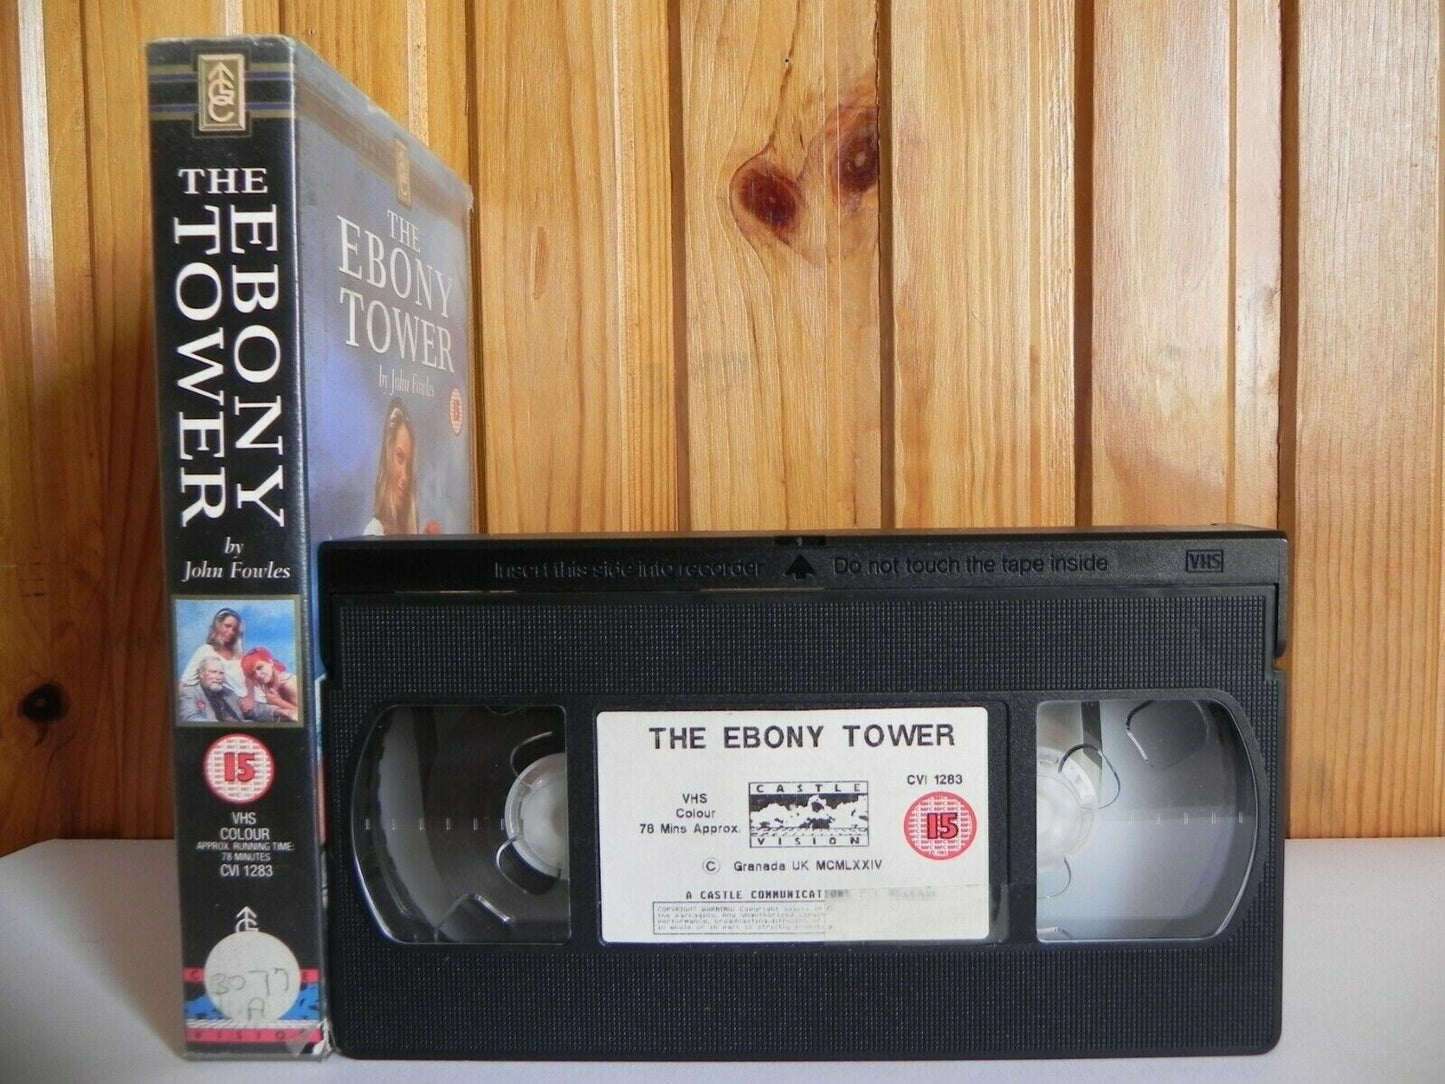 The Ebony Tower - Classic TV Drama - Laurence Olivier - Greta Scacchi - Pal VHS-